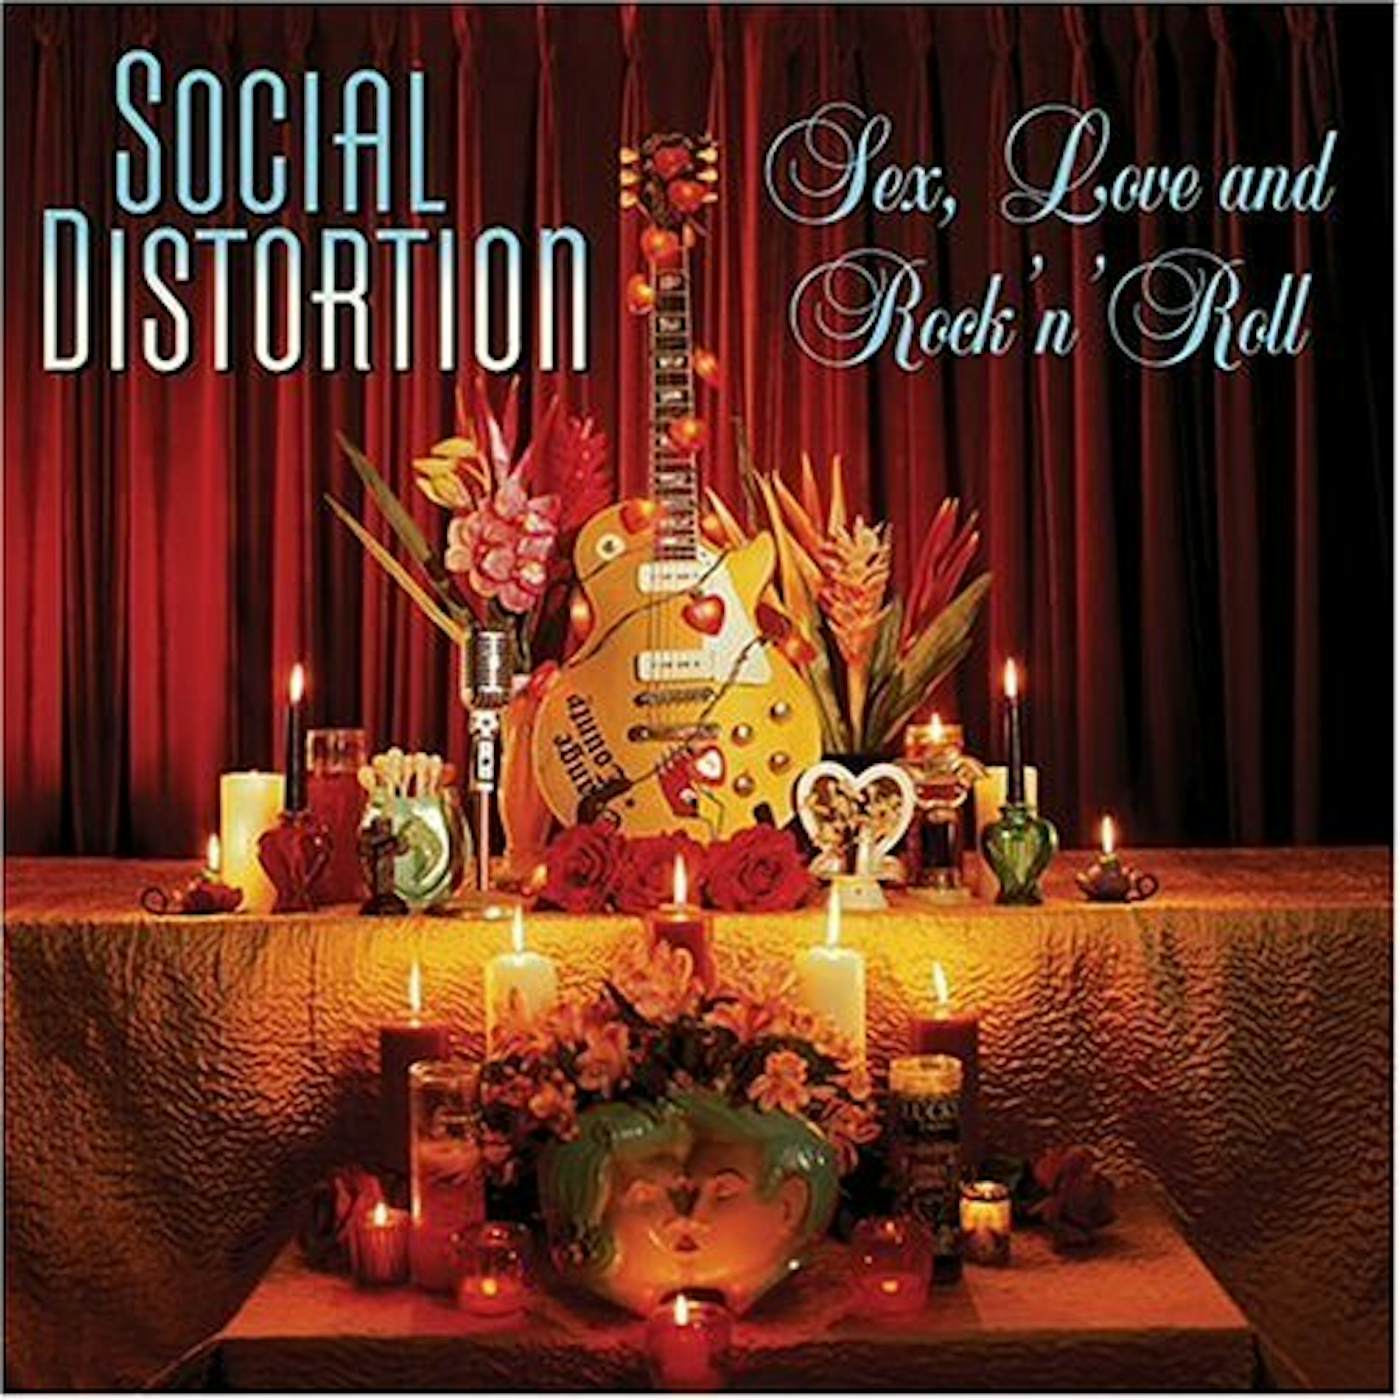 Social Distortion SEX LOVE & ROCK N ROLL CD